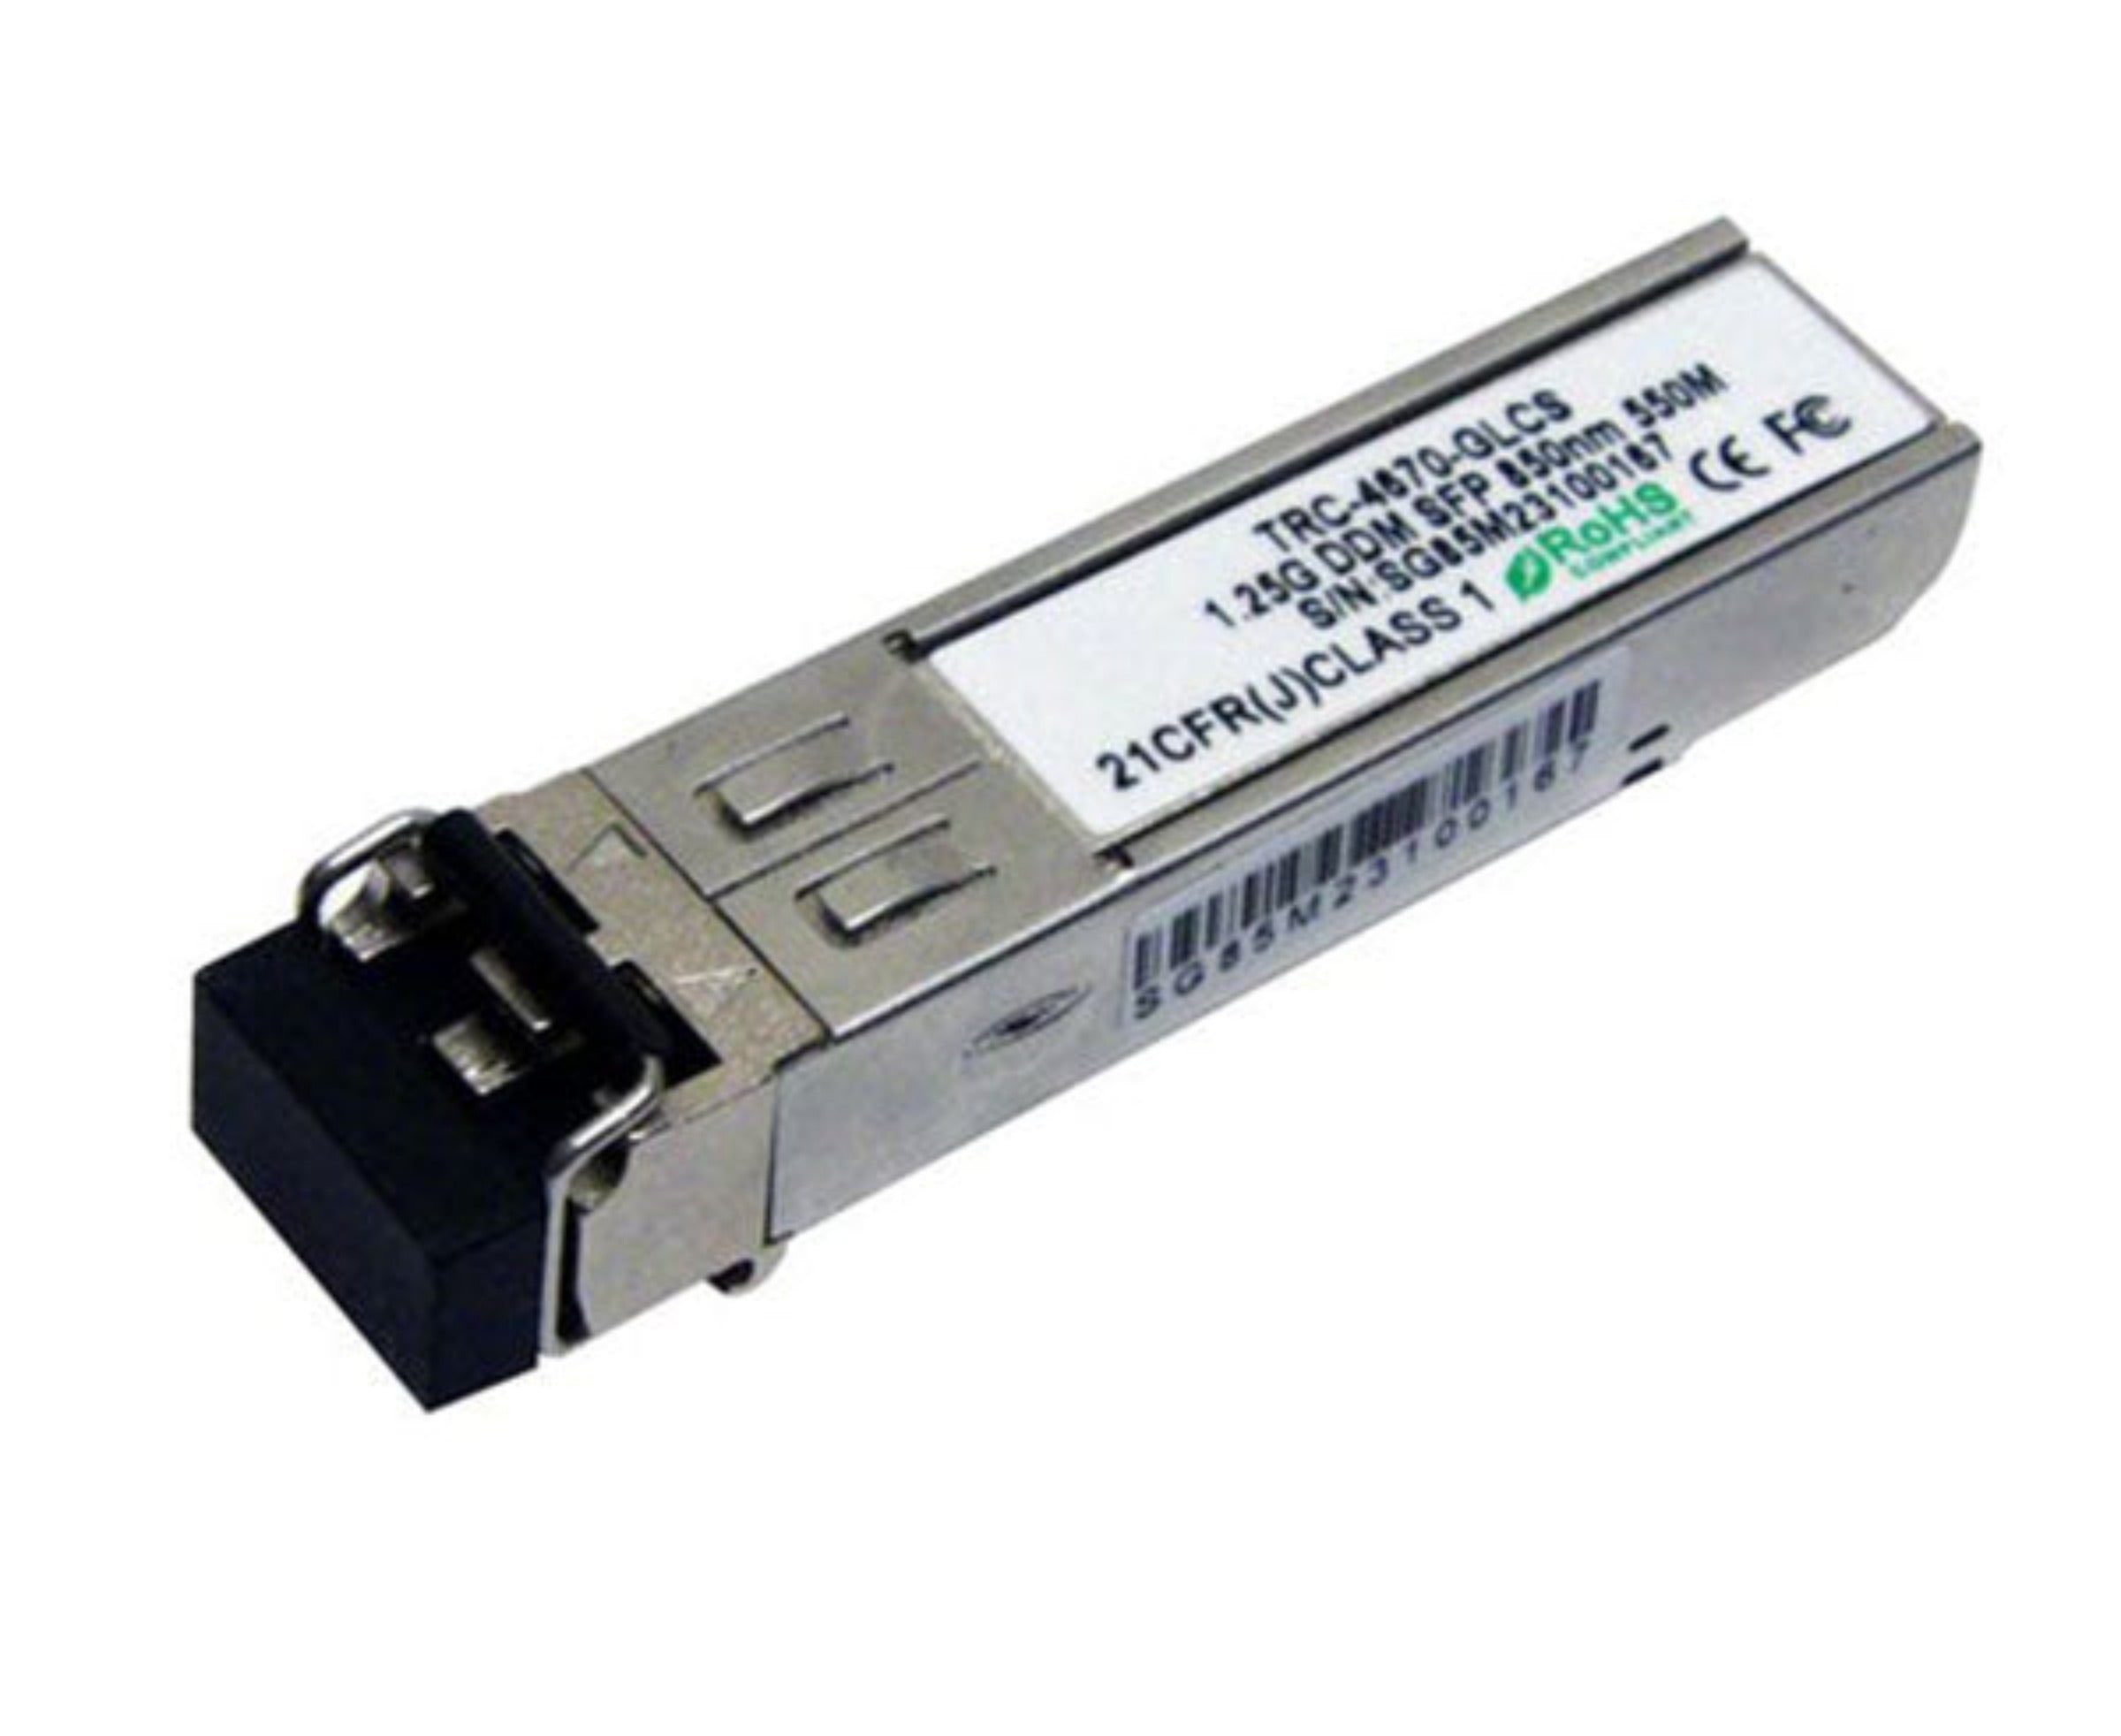 1000Base-SX multimode SFP fiber transceiver showing latch and dust cap.